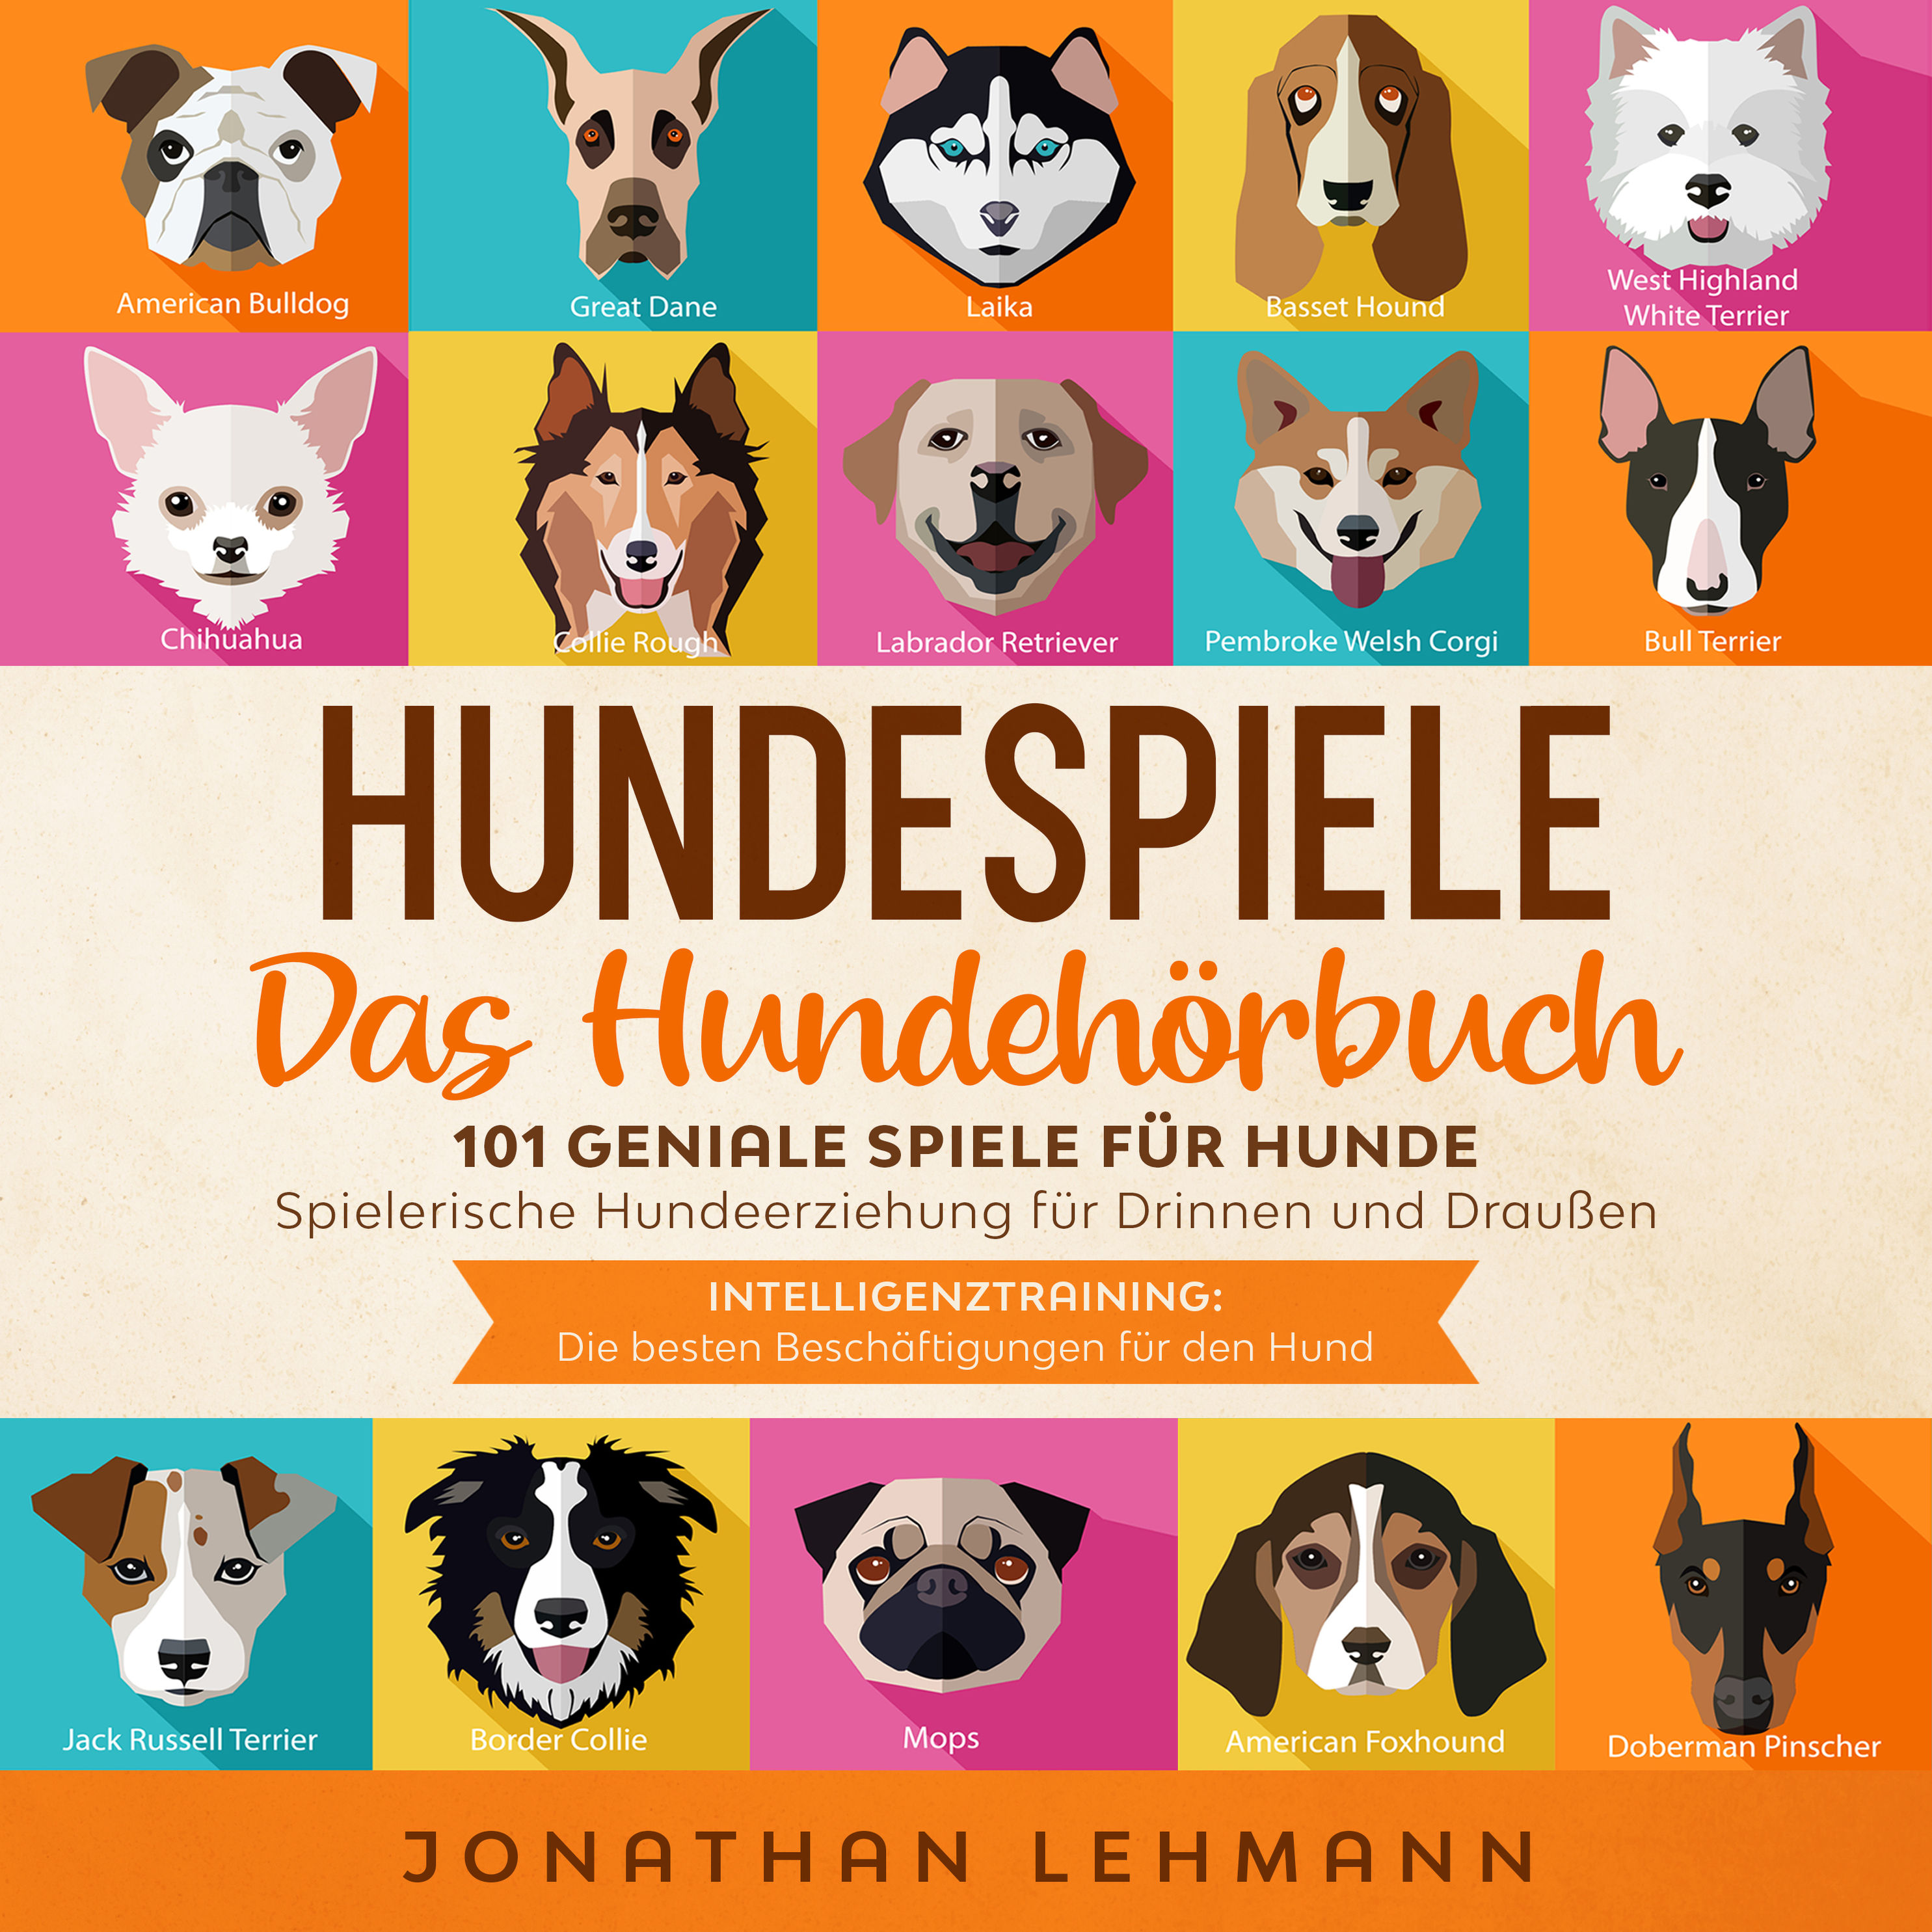 HUNDESPIELE Das Hundebuch Hörbuch downloaden bei Weltbild.ch